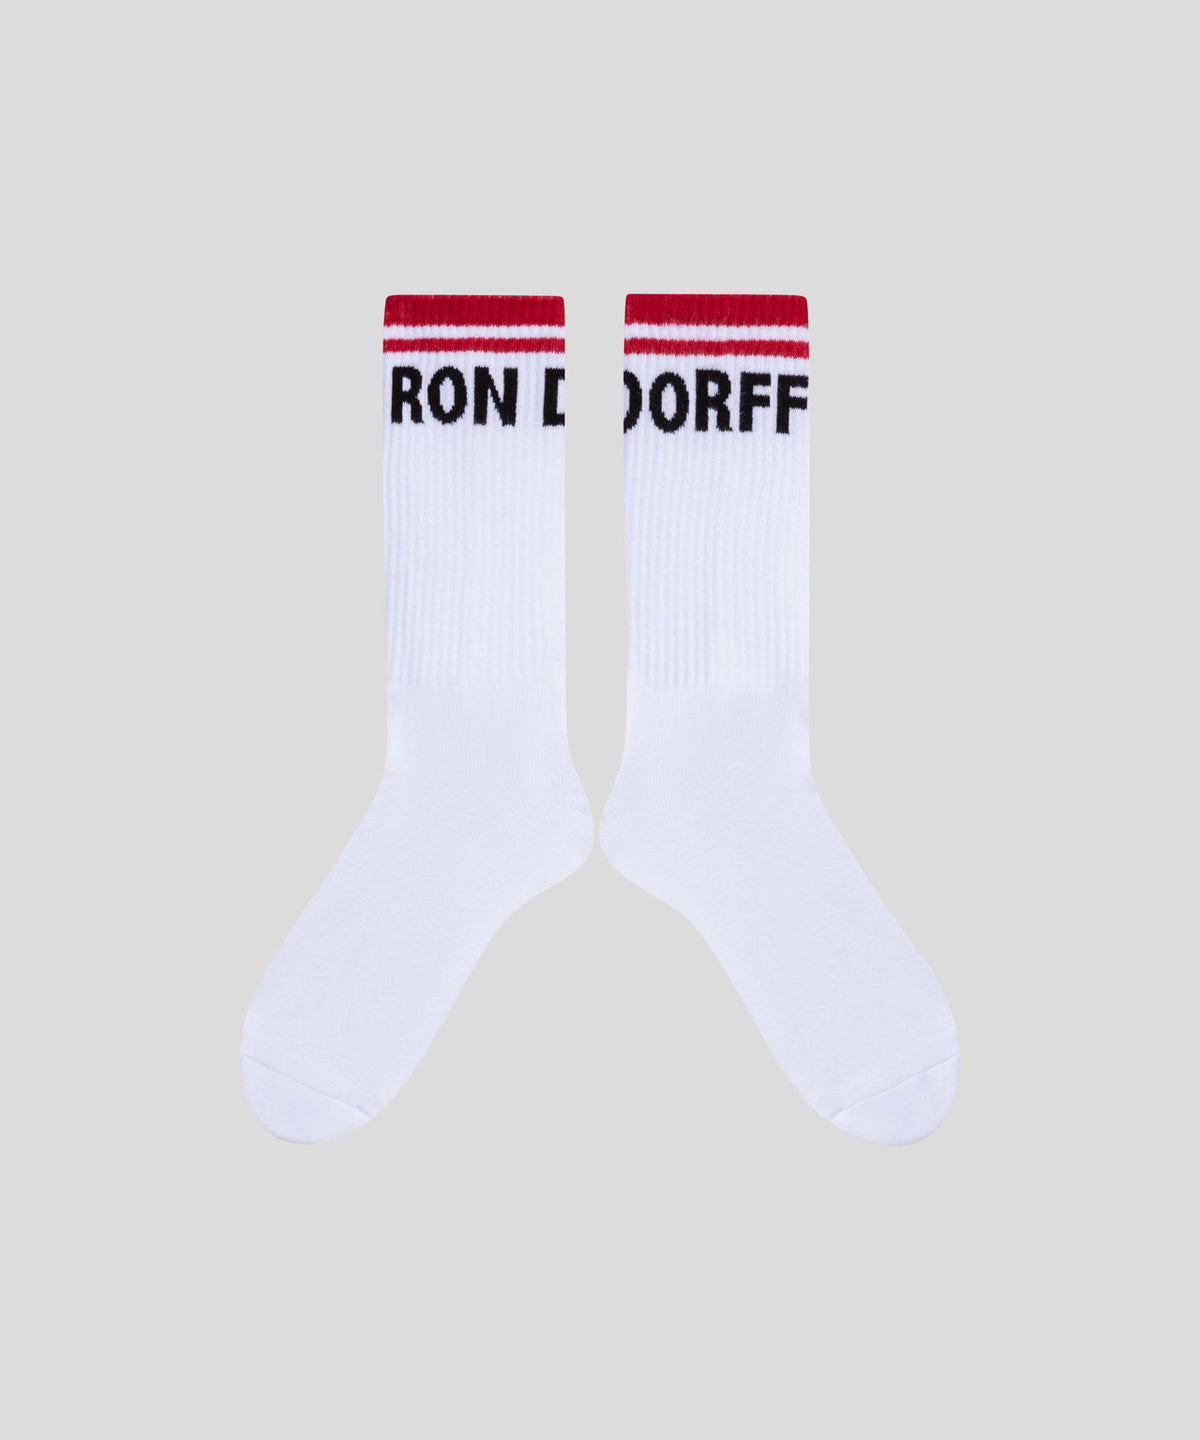 Sports Socks RON DORFF: White / Amalfi Red